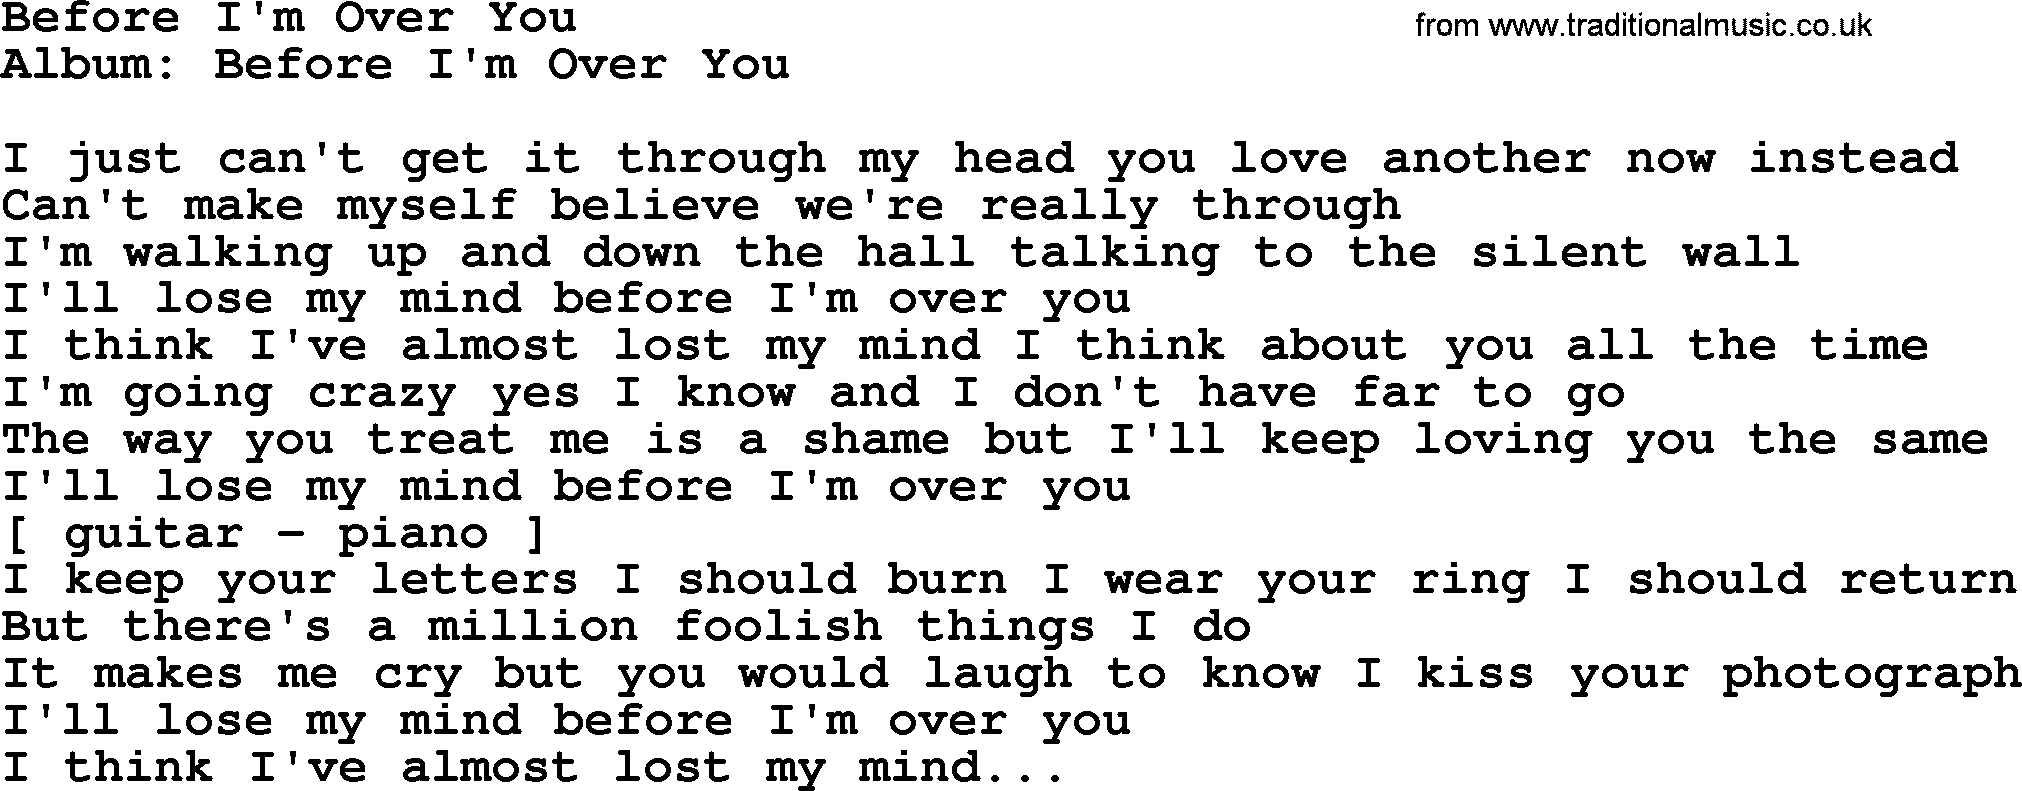 Loretta Lynn song: Before I'm Over You lyrics